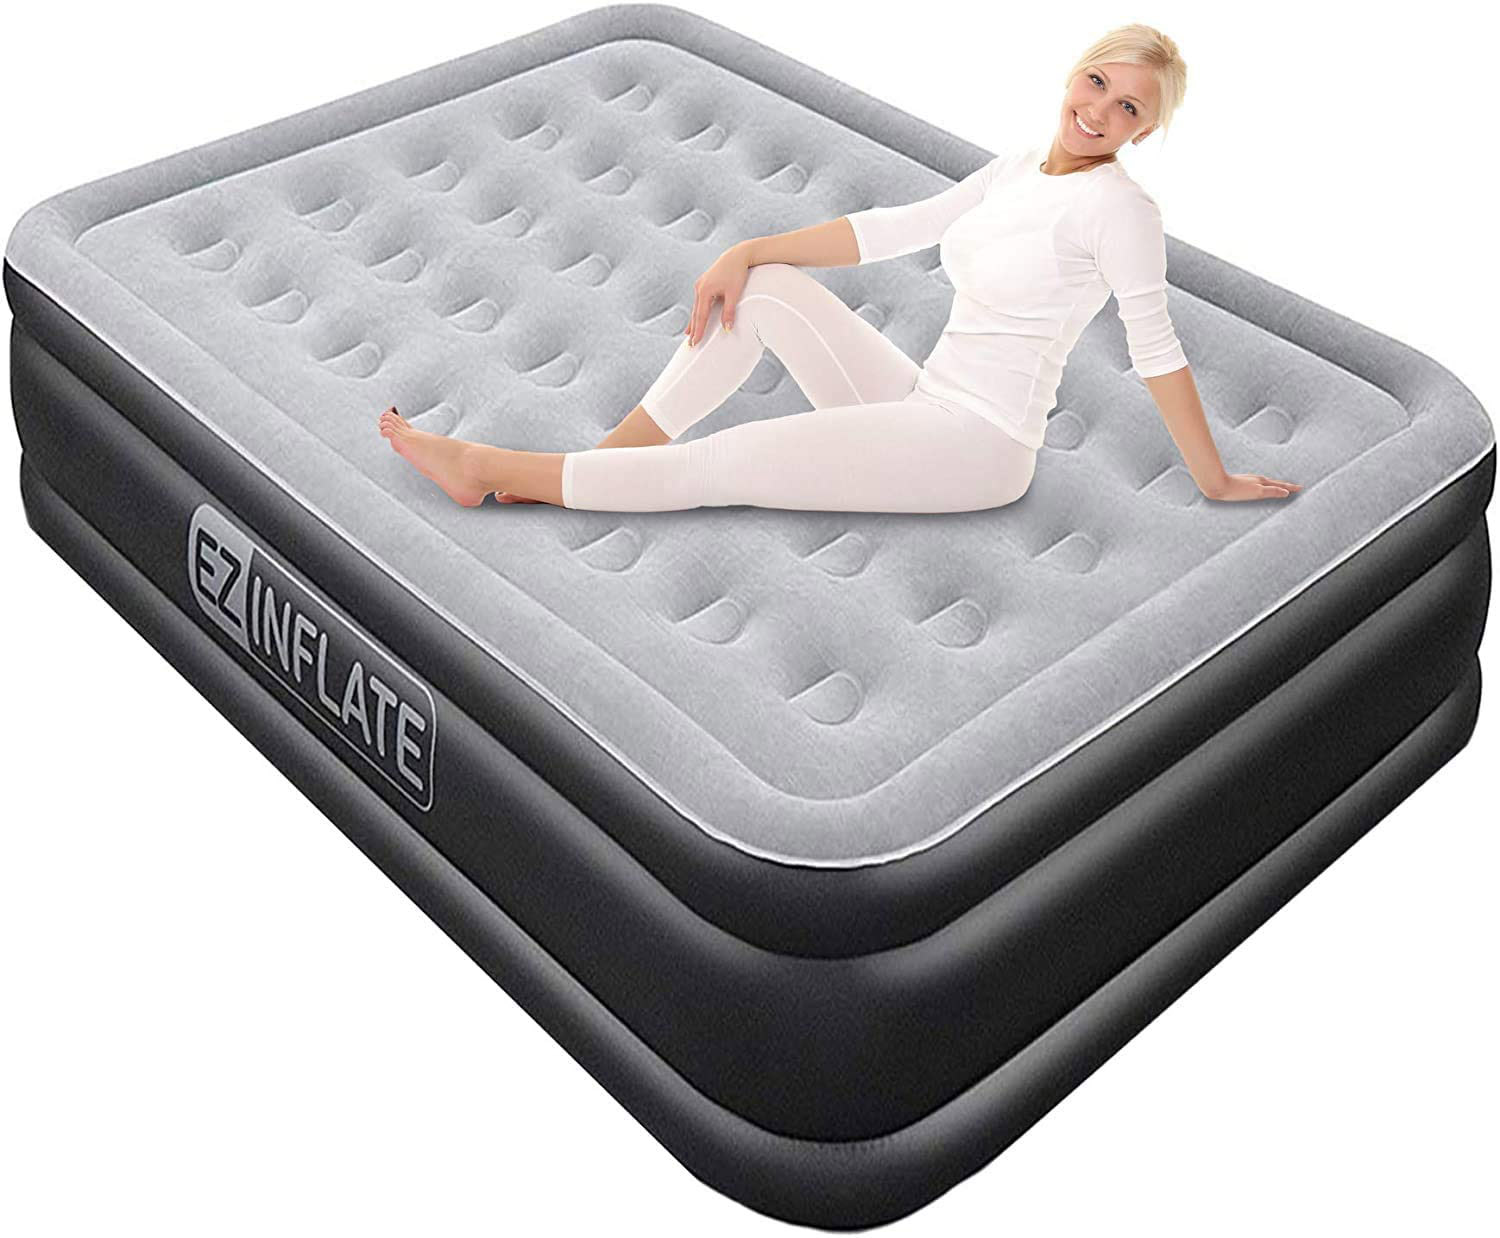 camping air mattress for chevy silverado